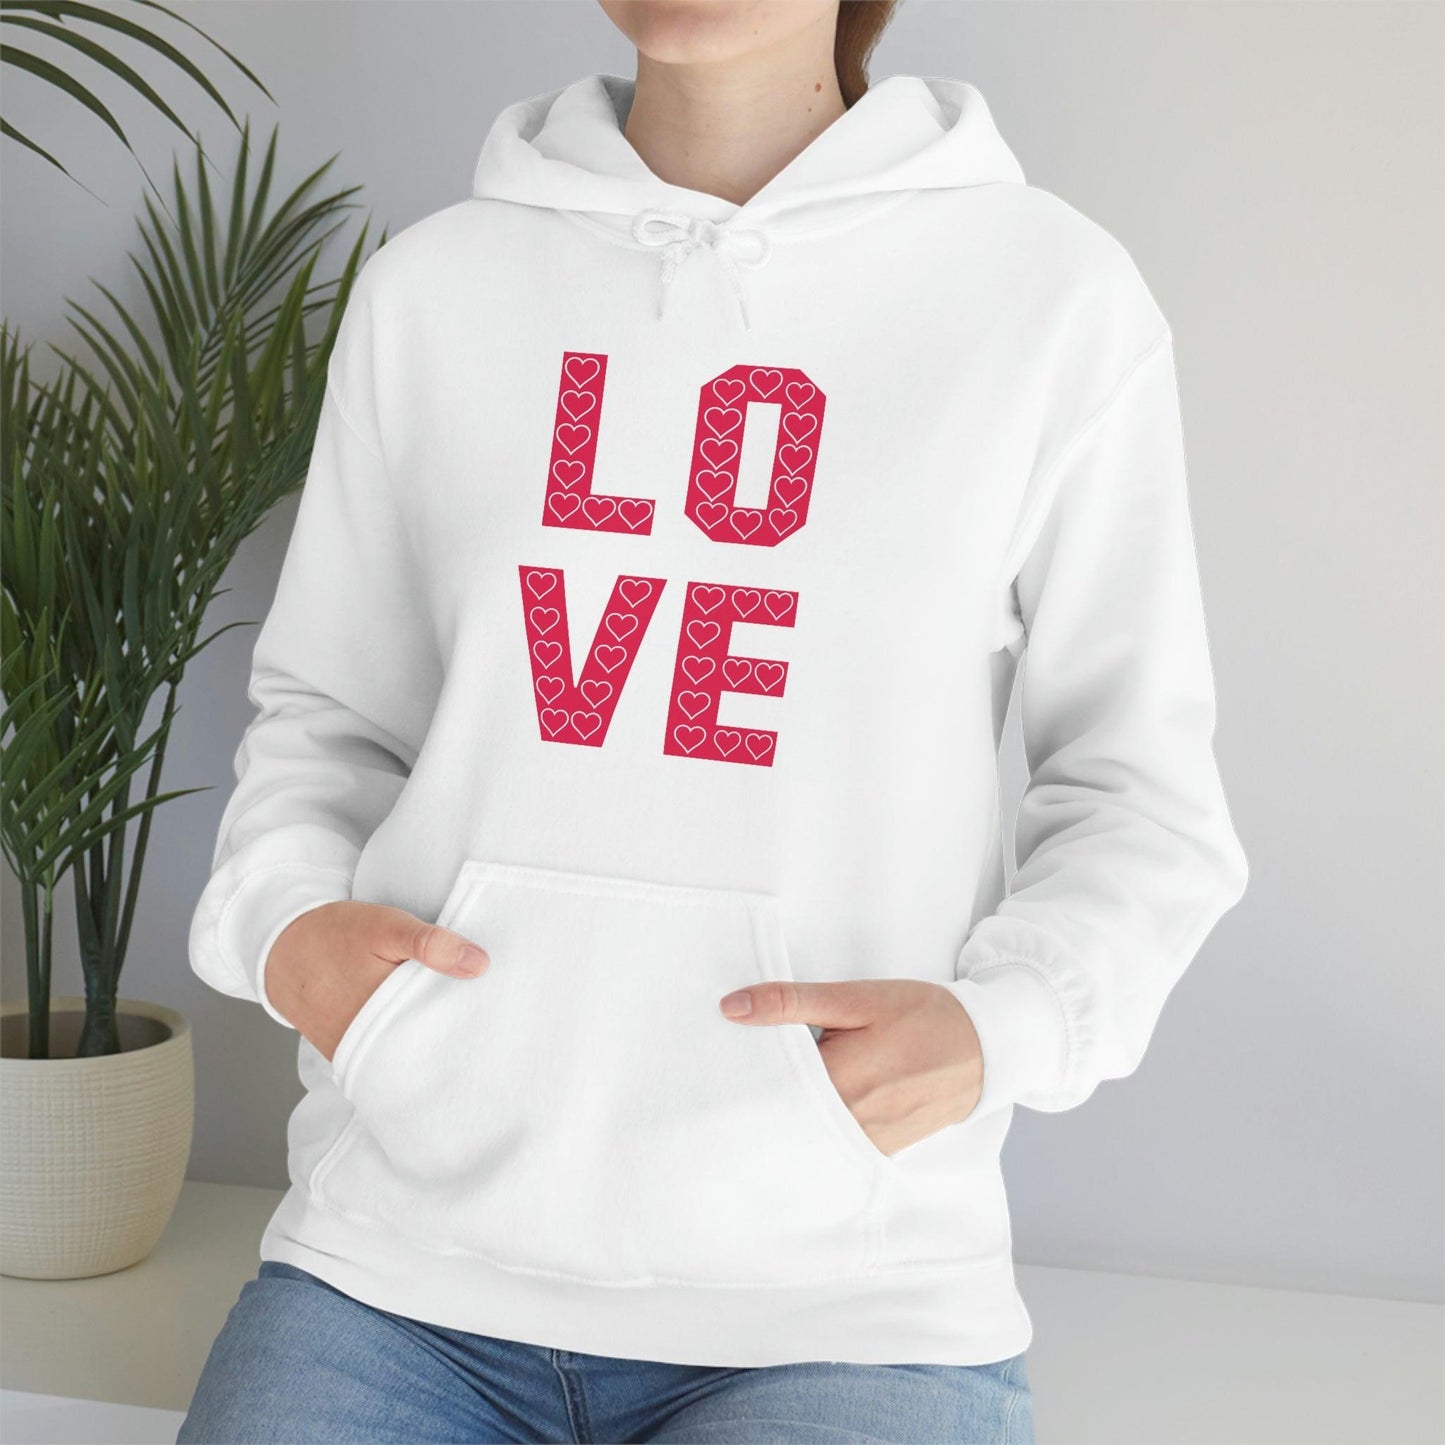 Love Hooded sweatshirt